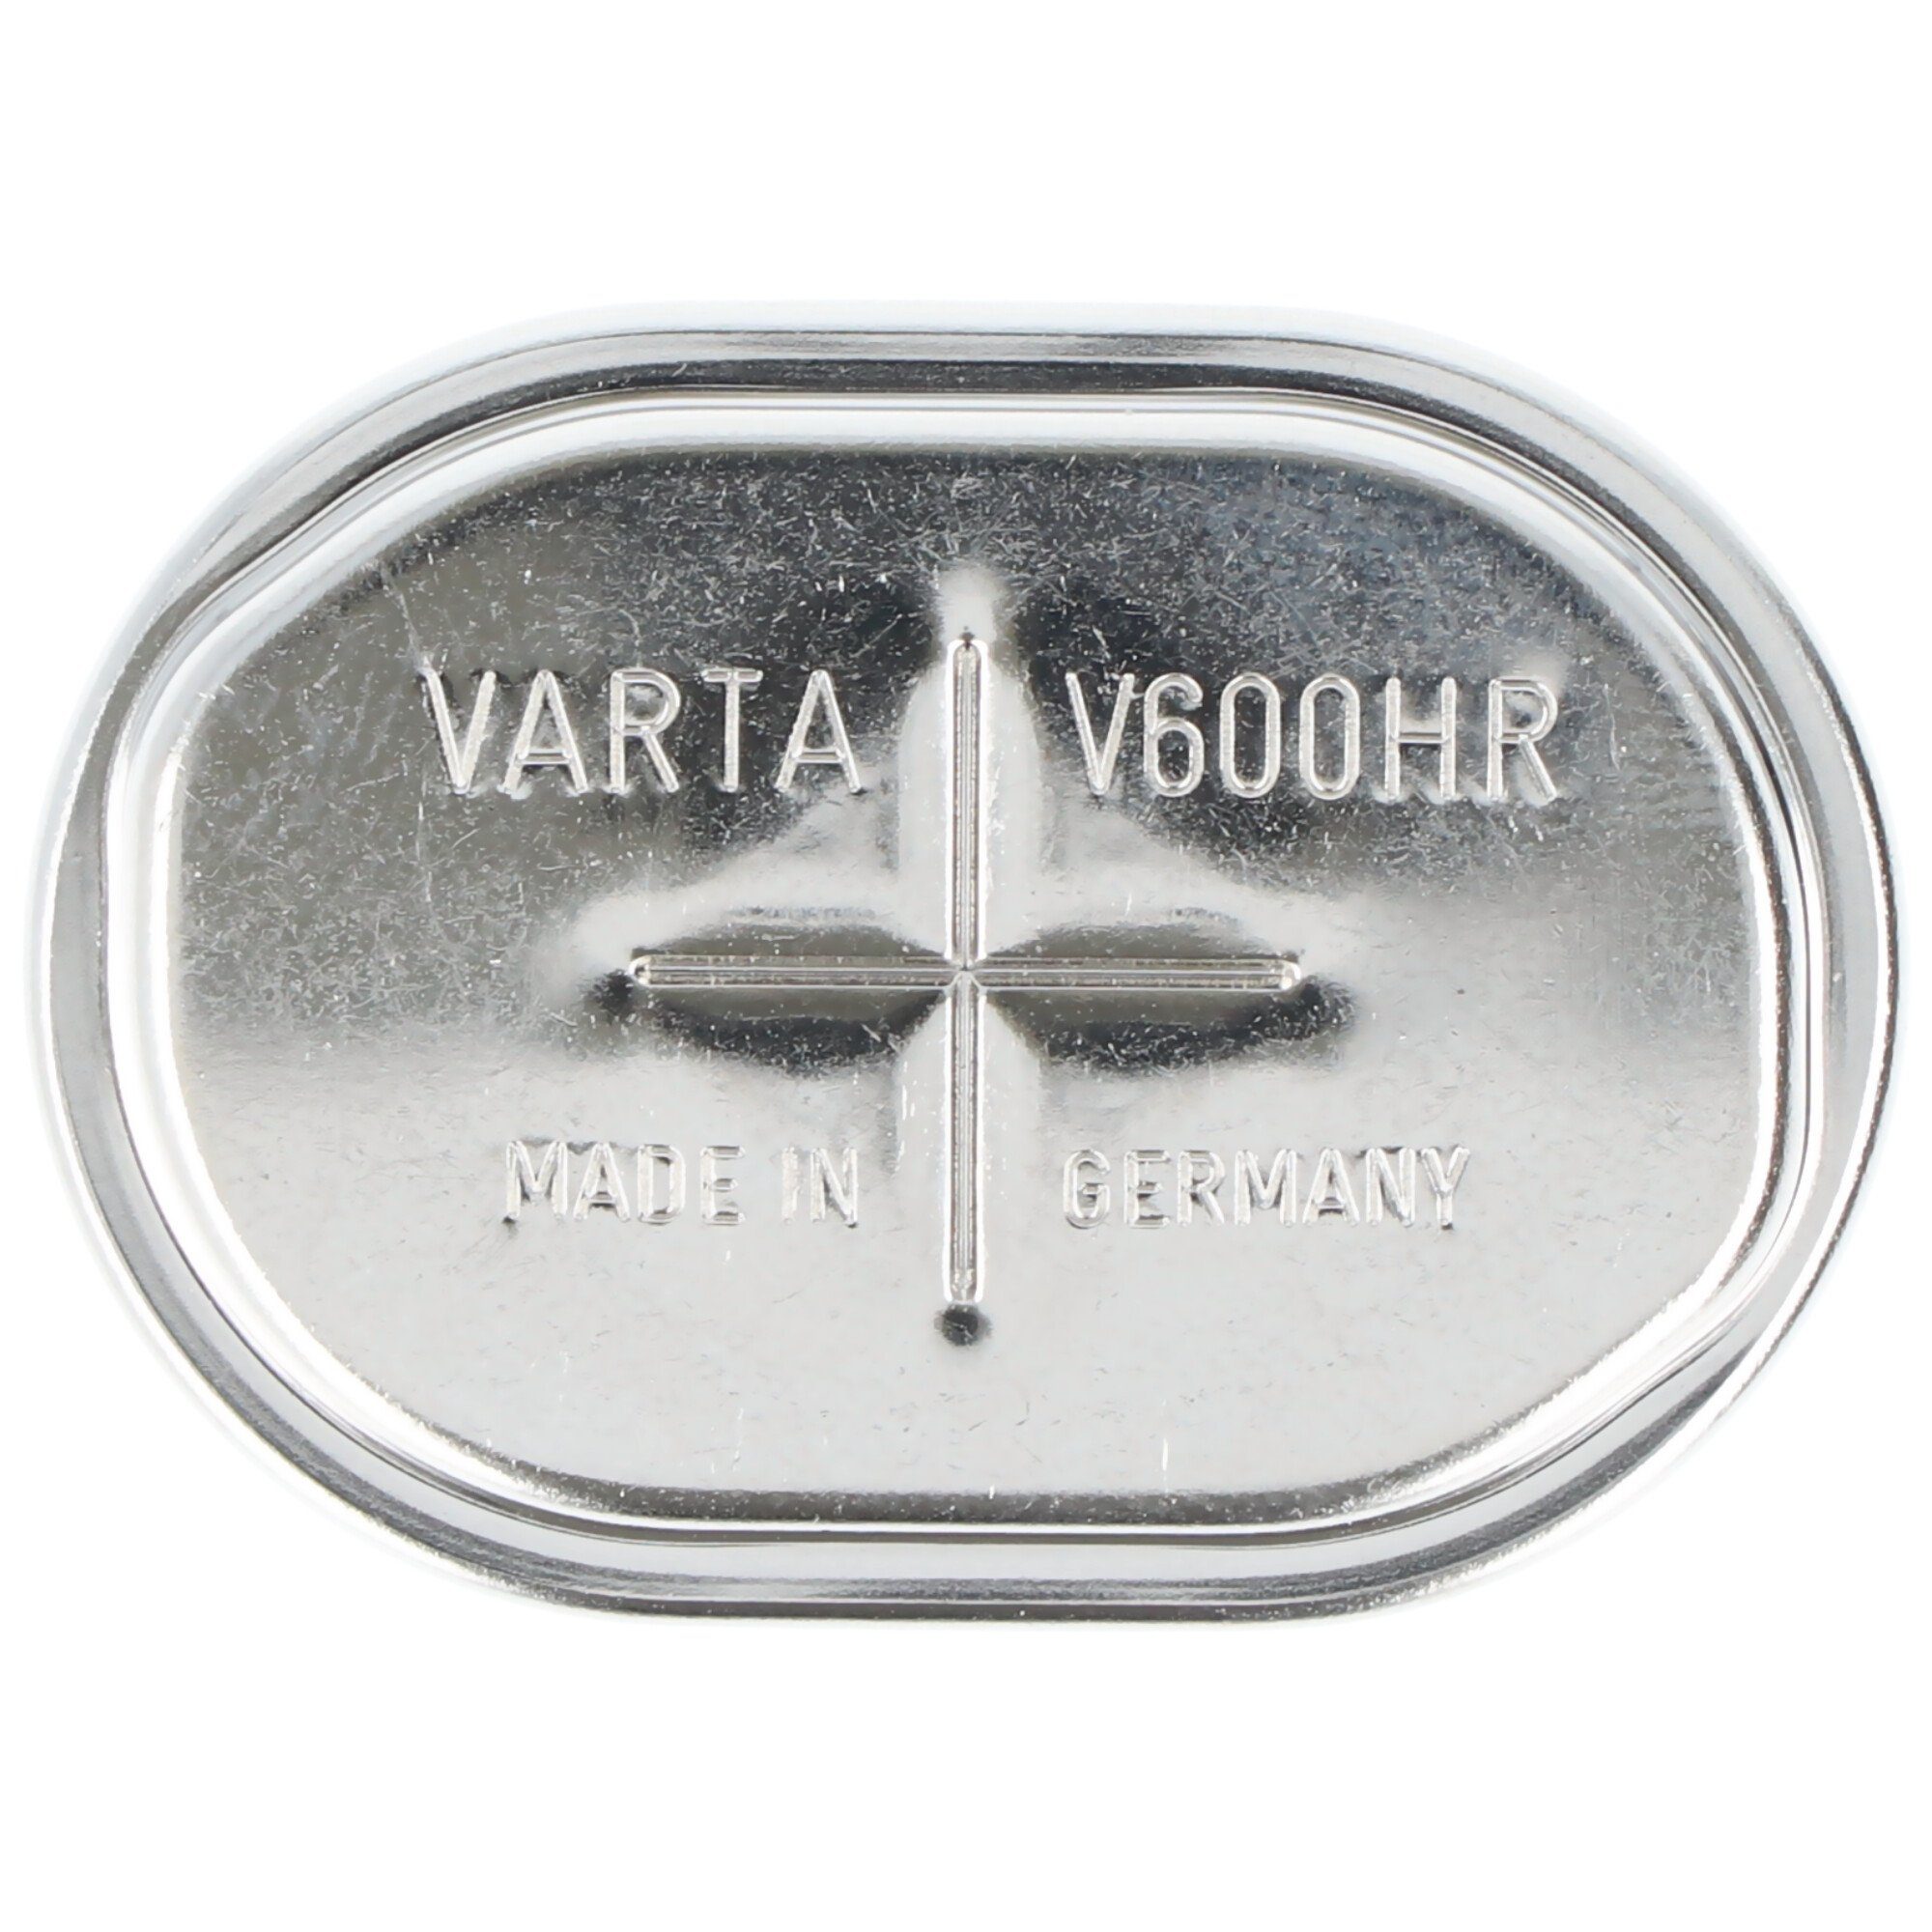 600 Akku V) Knopfzelle NiMH VARTA mAh Varta Akku aufladbare NiMH V600HR (1,2